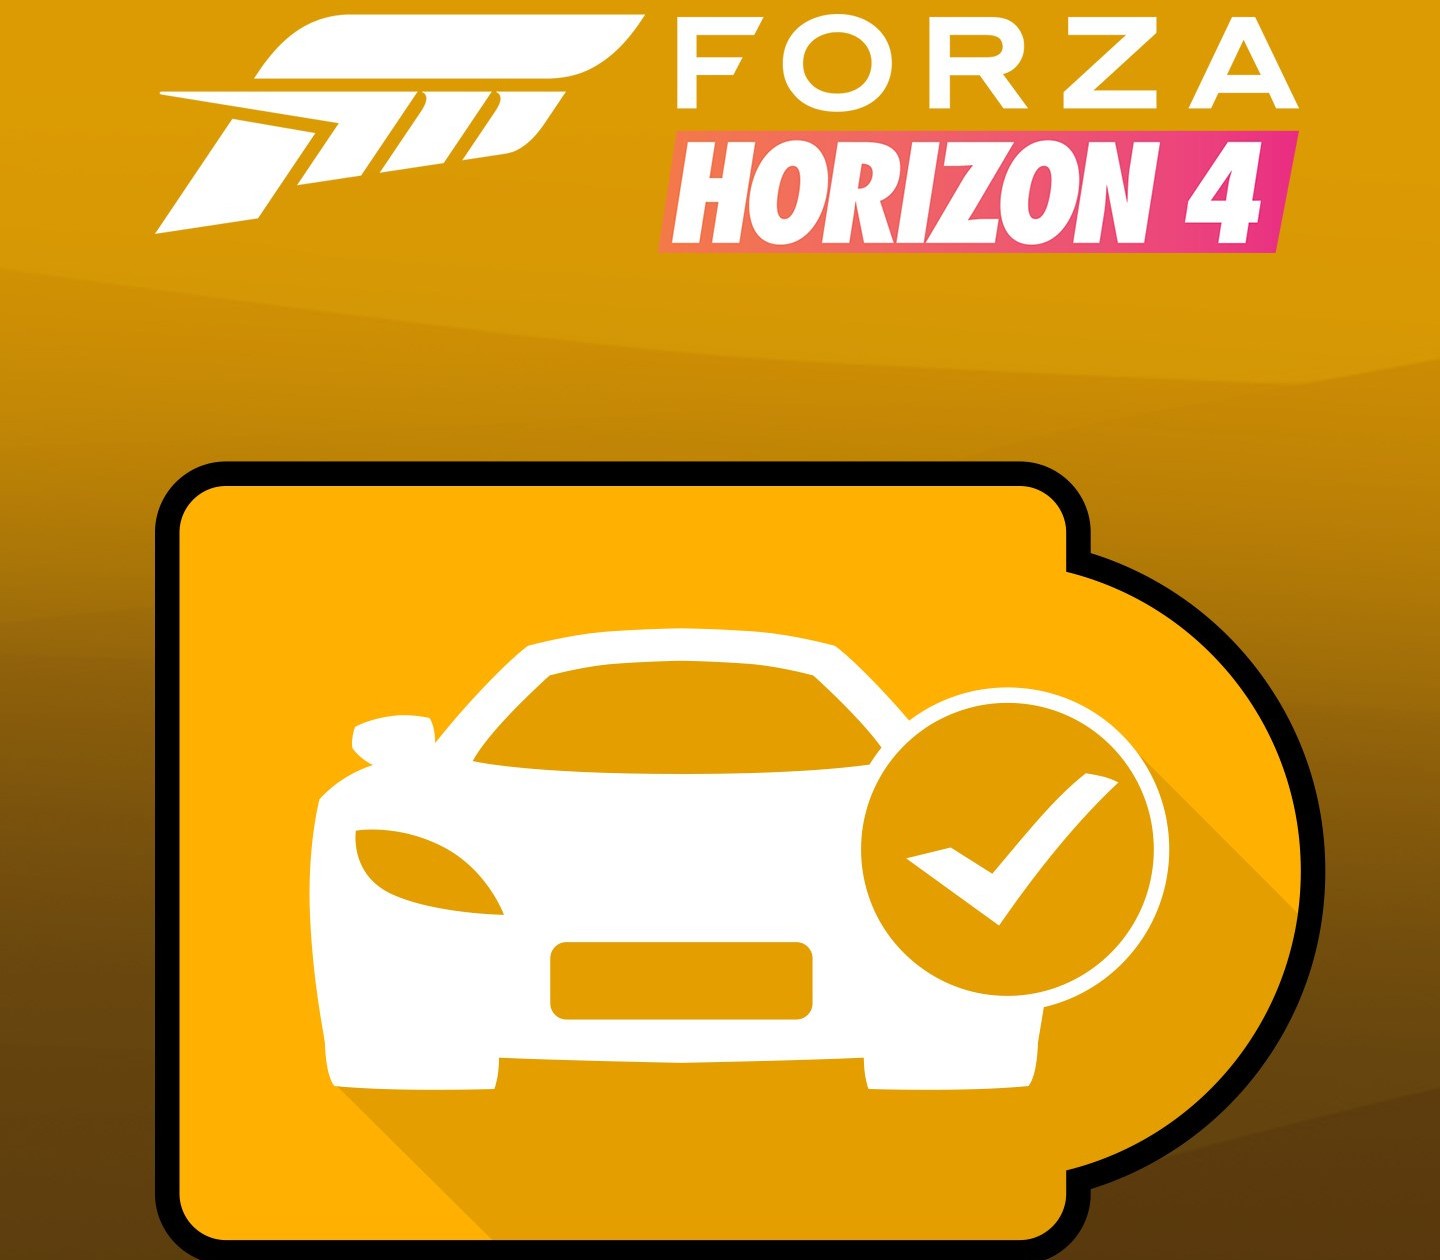 Download Xbox Forza Horizon 4 Hot Wheels Legends Car Pack Xbox One Digital  Code